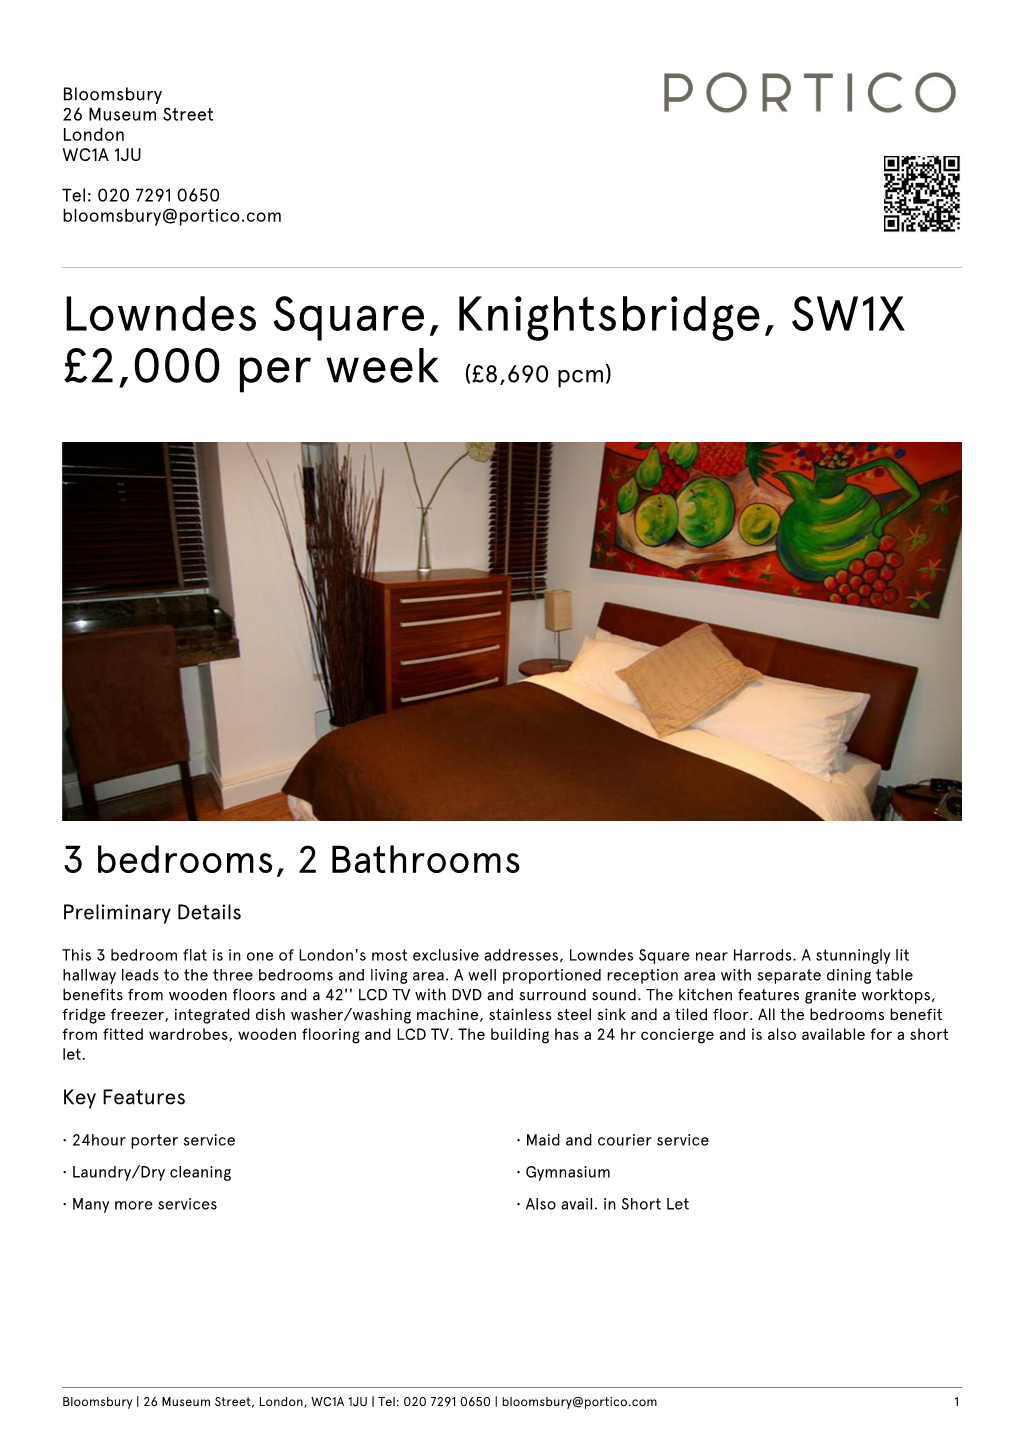 Lowndes Square, Knightsbridge, SW1X £2000 Per Week